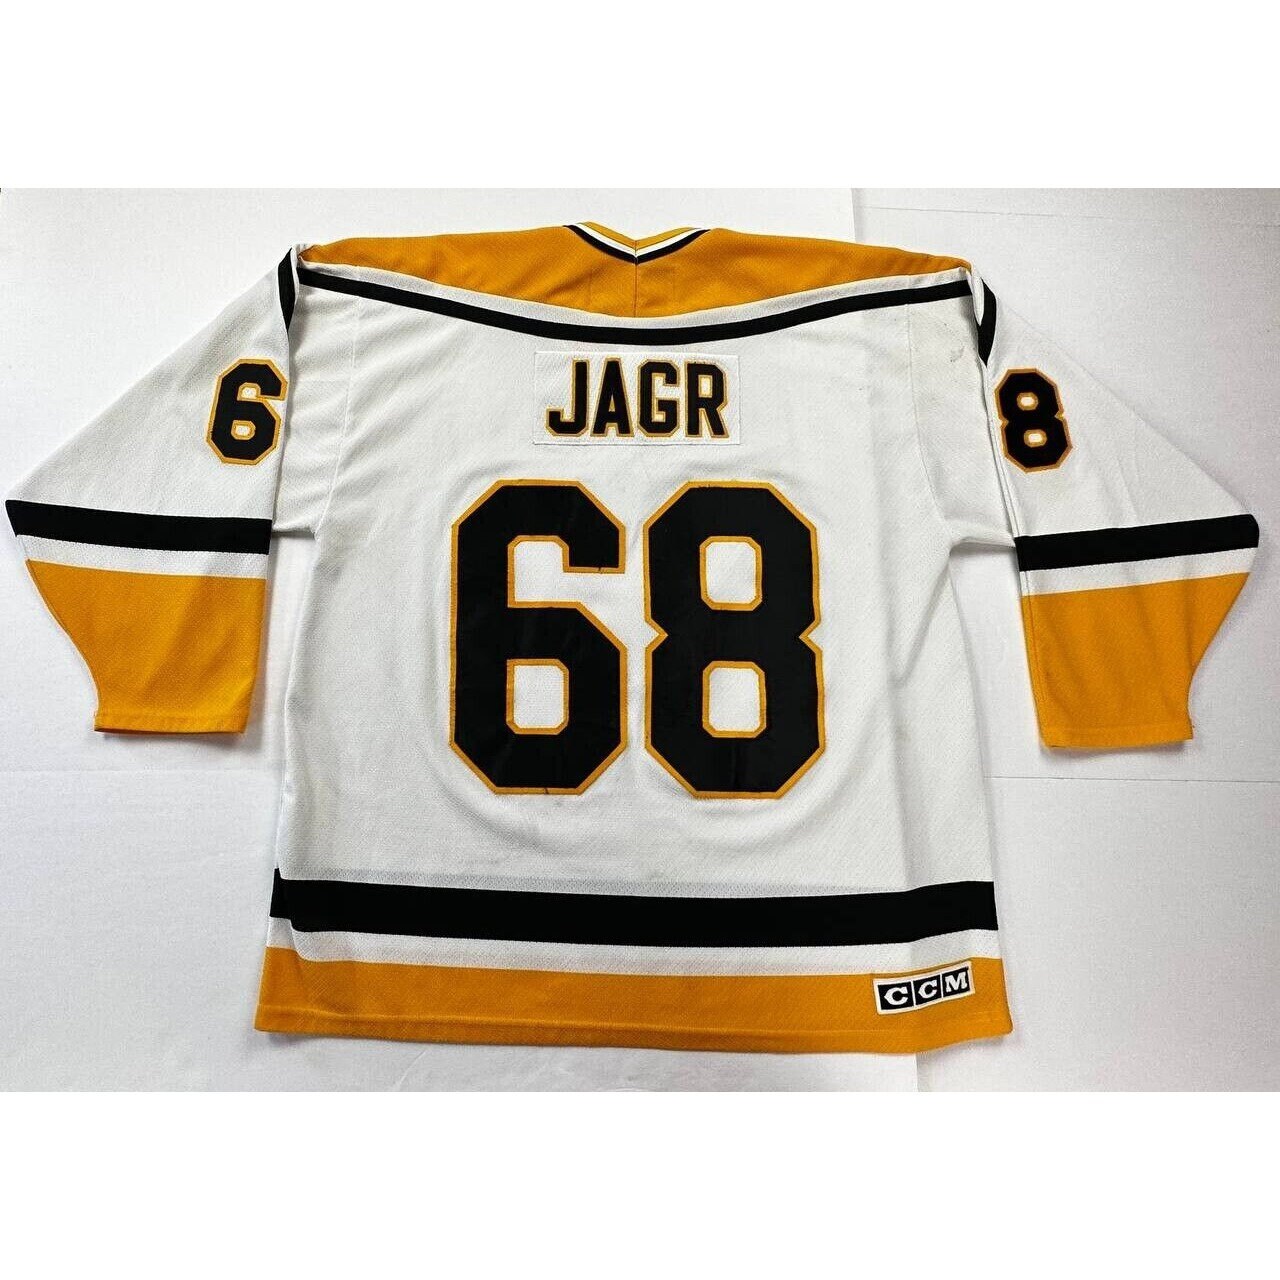 Dallas Stars #68 Jaromir Jagr Black Jersey on sale,for Cheap